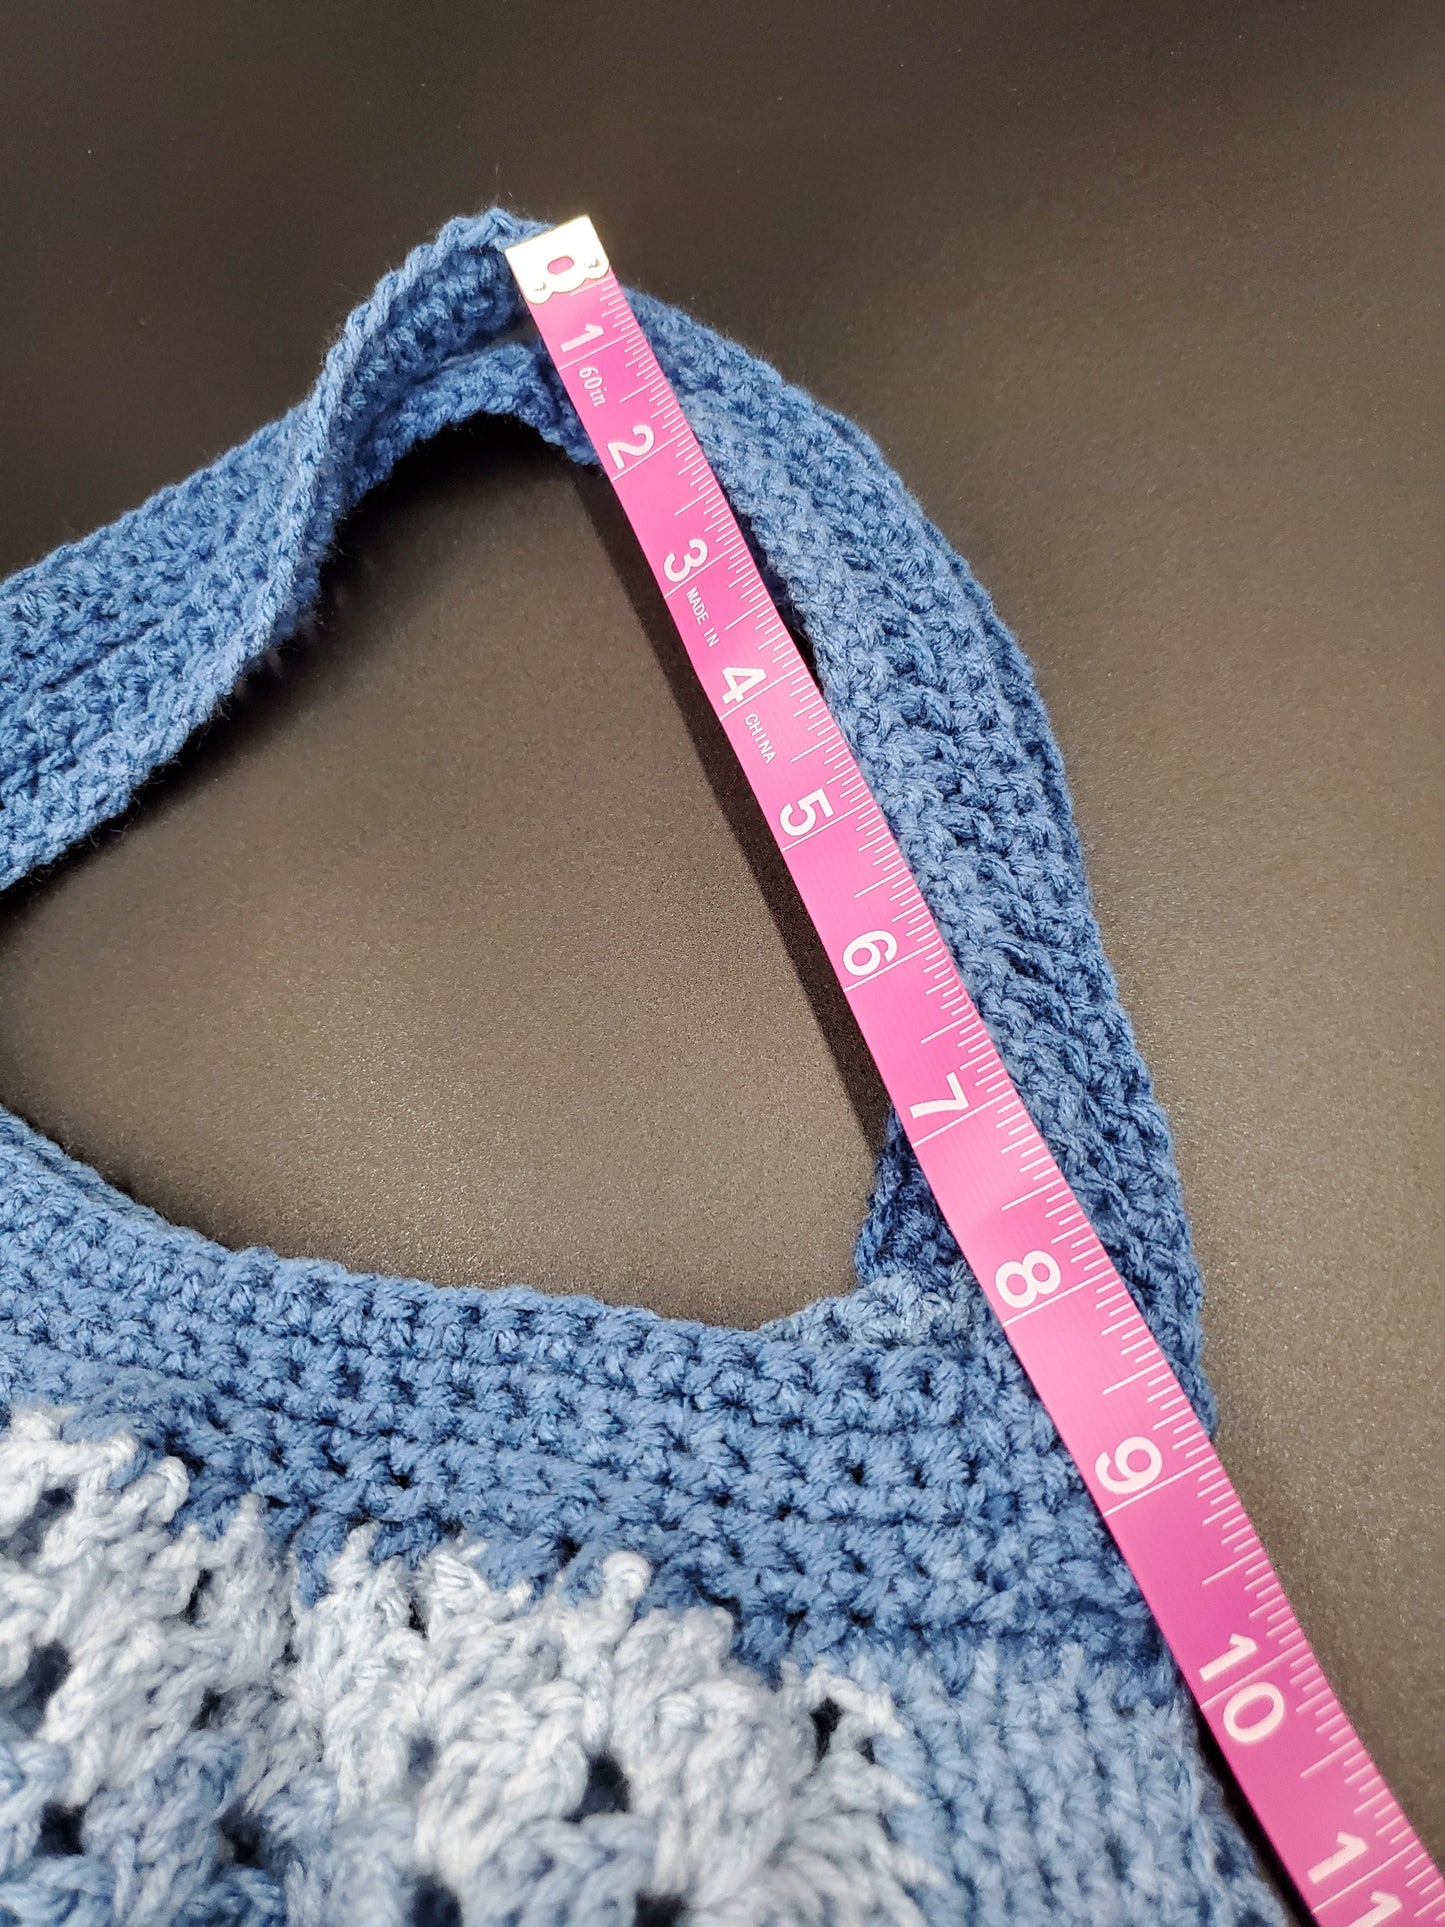 Market Bag / Crocheted Bag / Blue Ombre